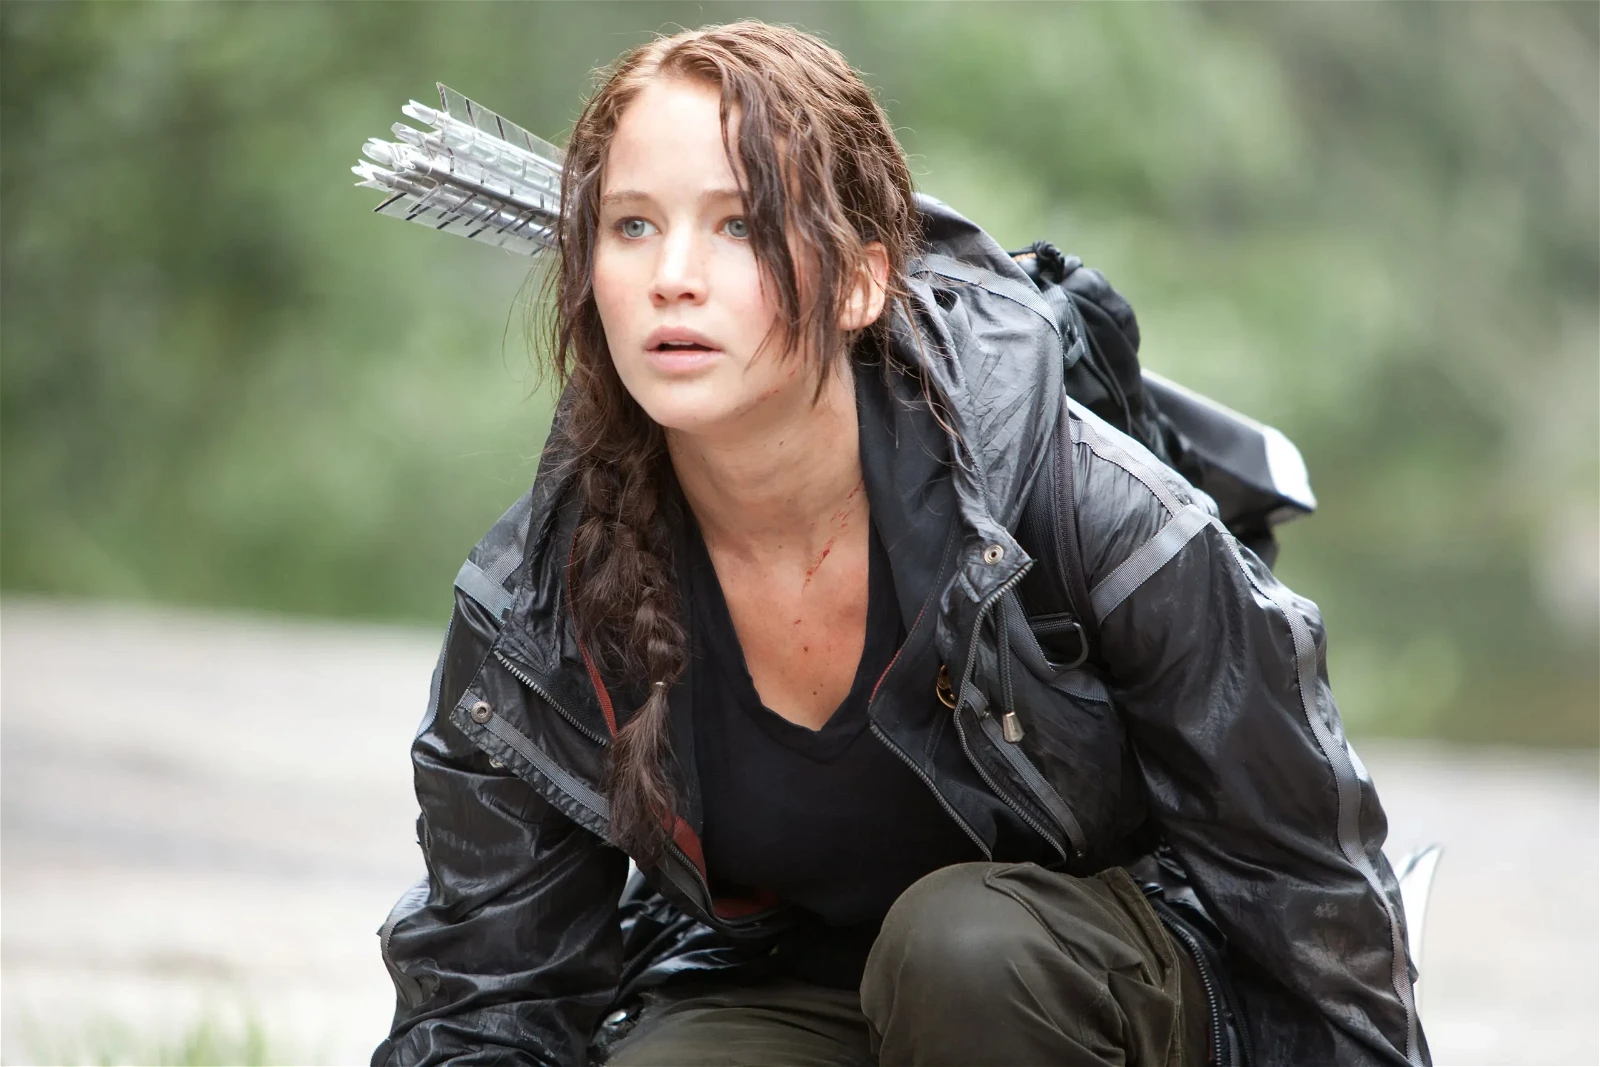 Jennifer Lawrence in The Hunger Games franchise